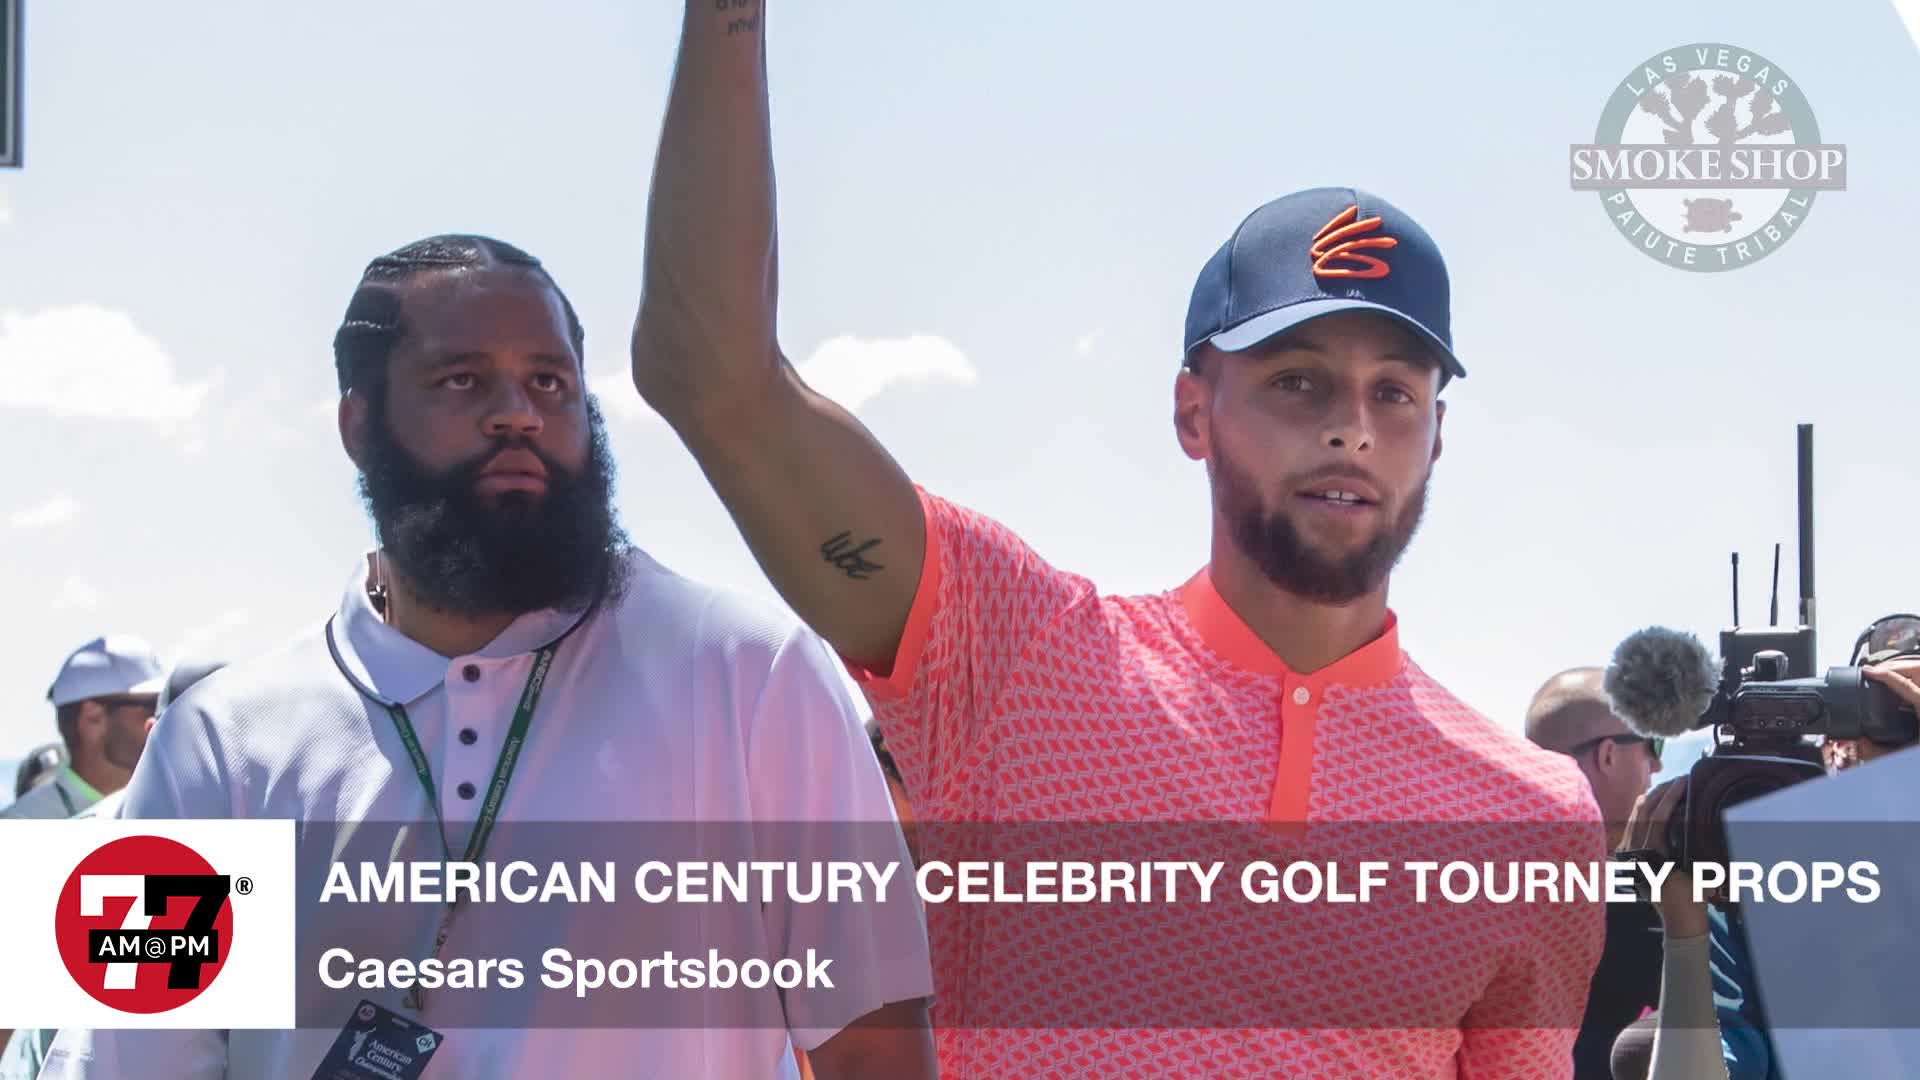 Celebrity Golf Tournament